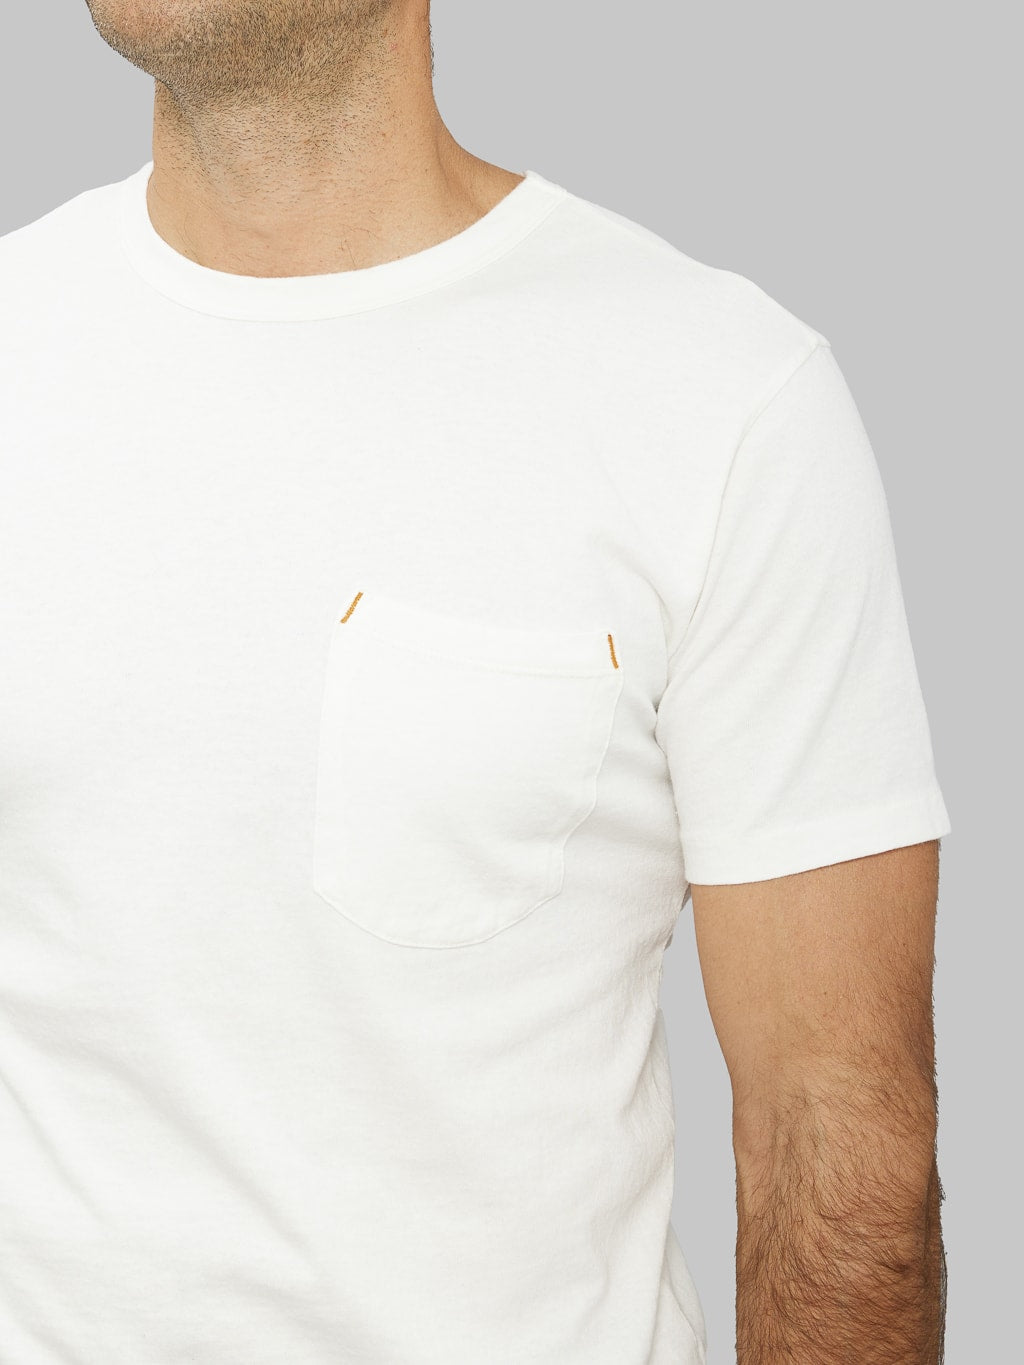 freenote cloth 9 ounce pocket t shirt white  sleeve details